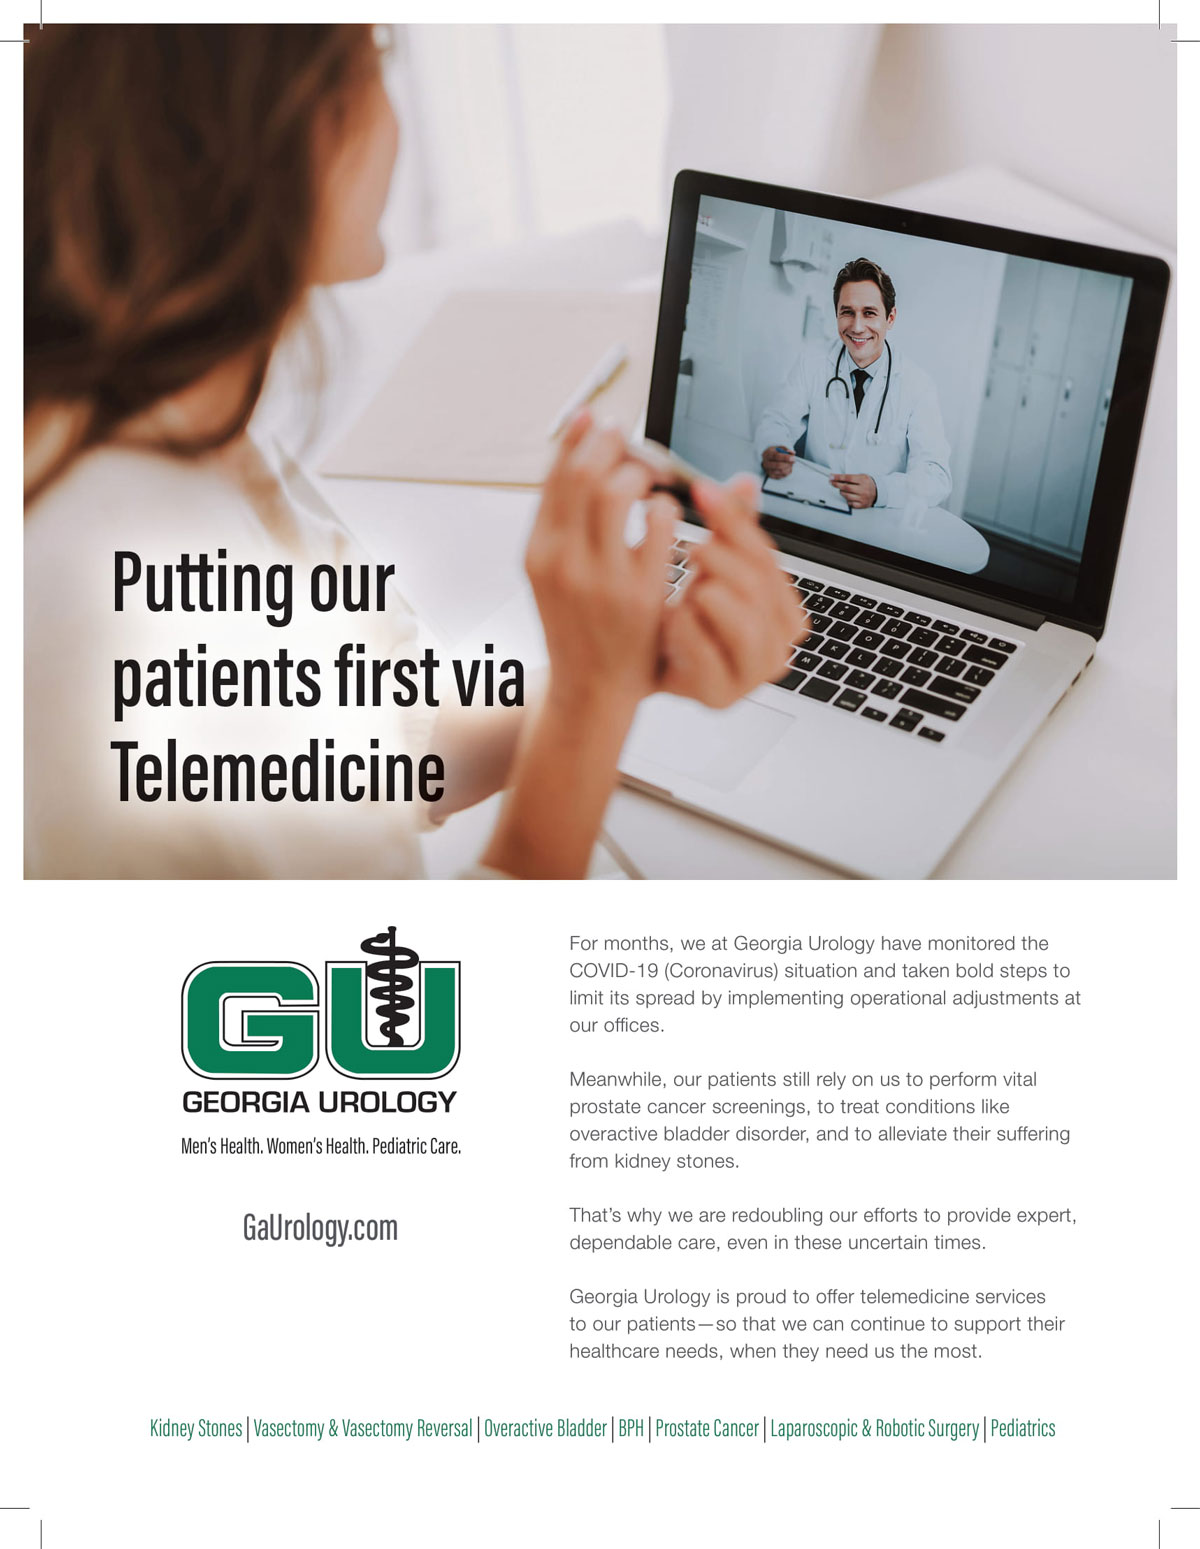 Screenshot of an advertisement for Georgia Urology's medicine practices.